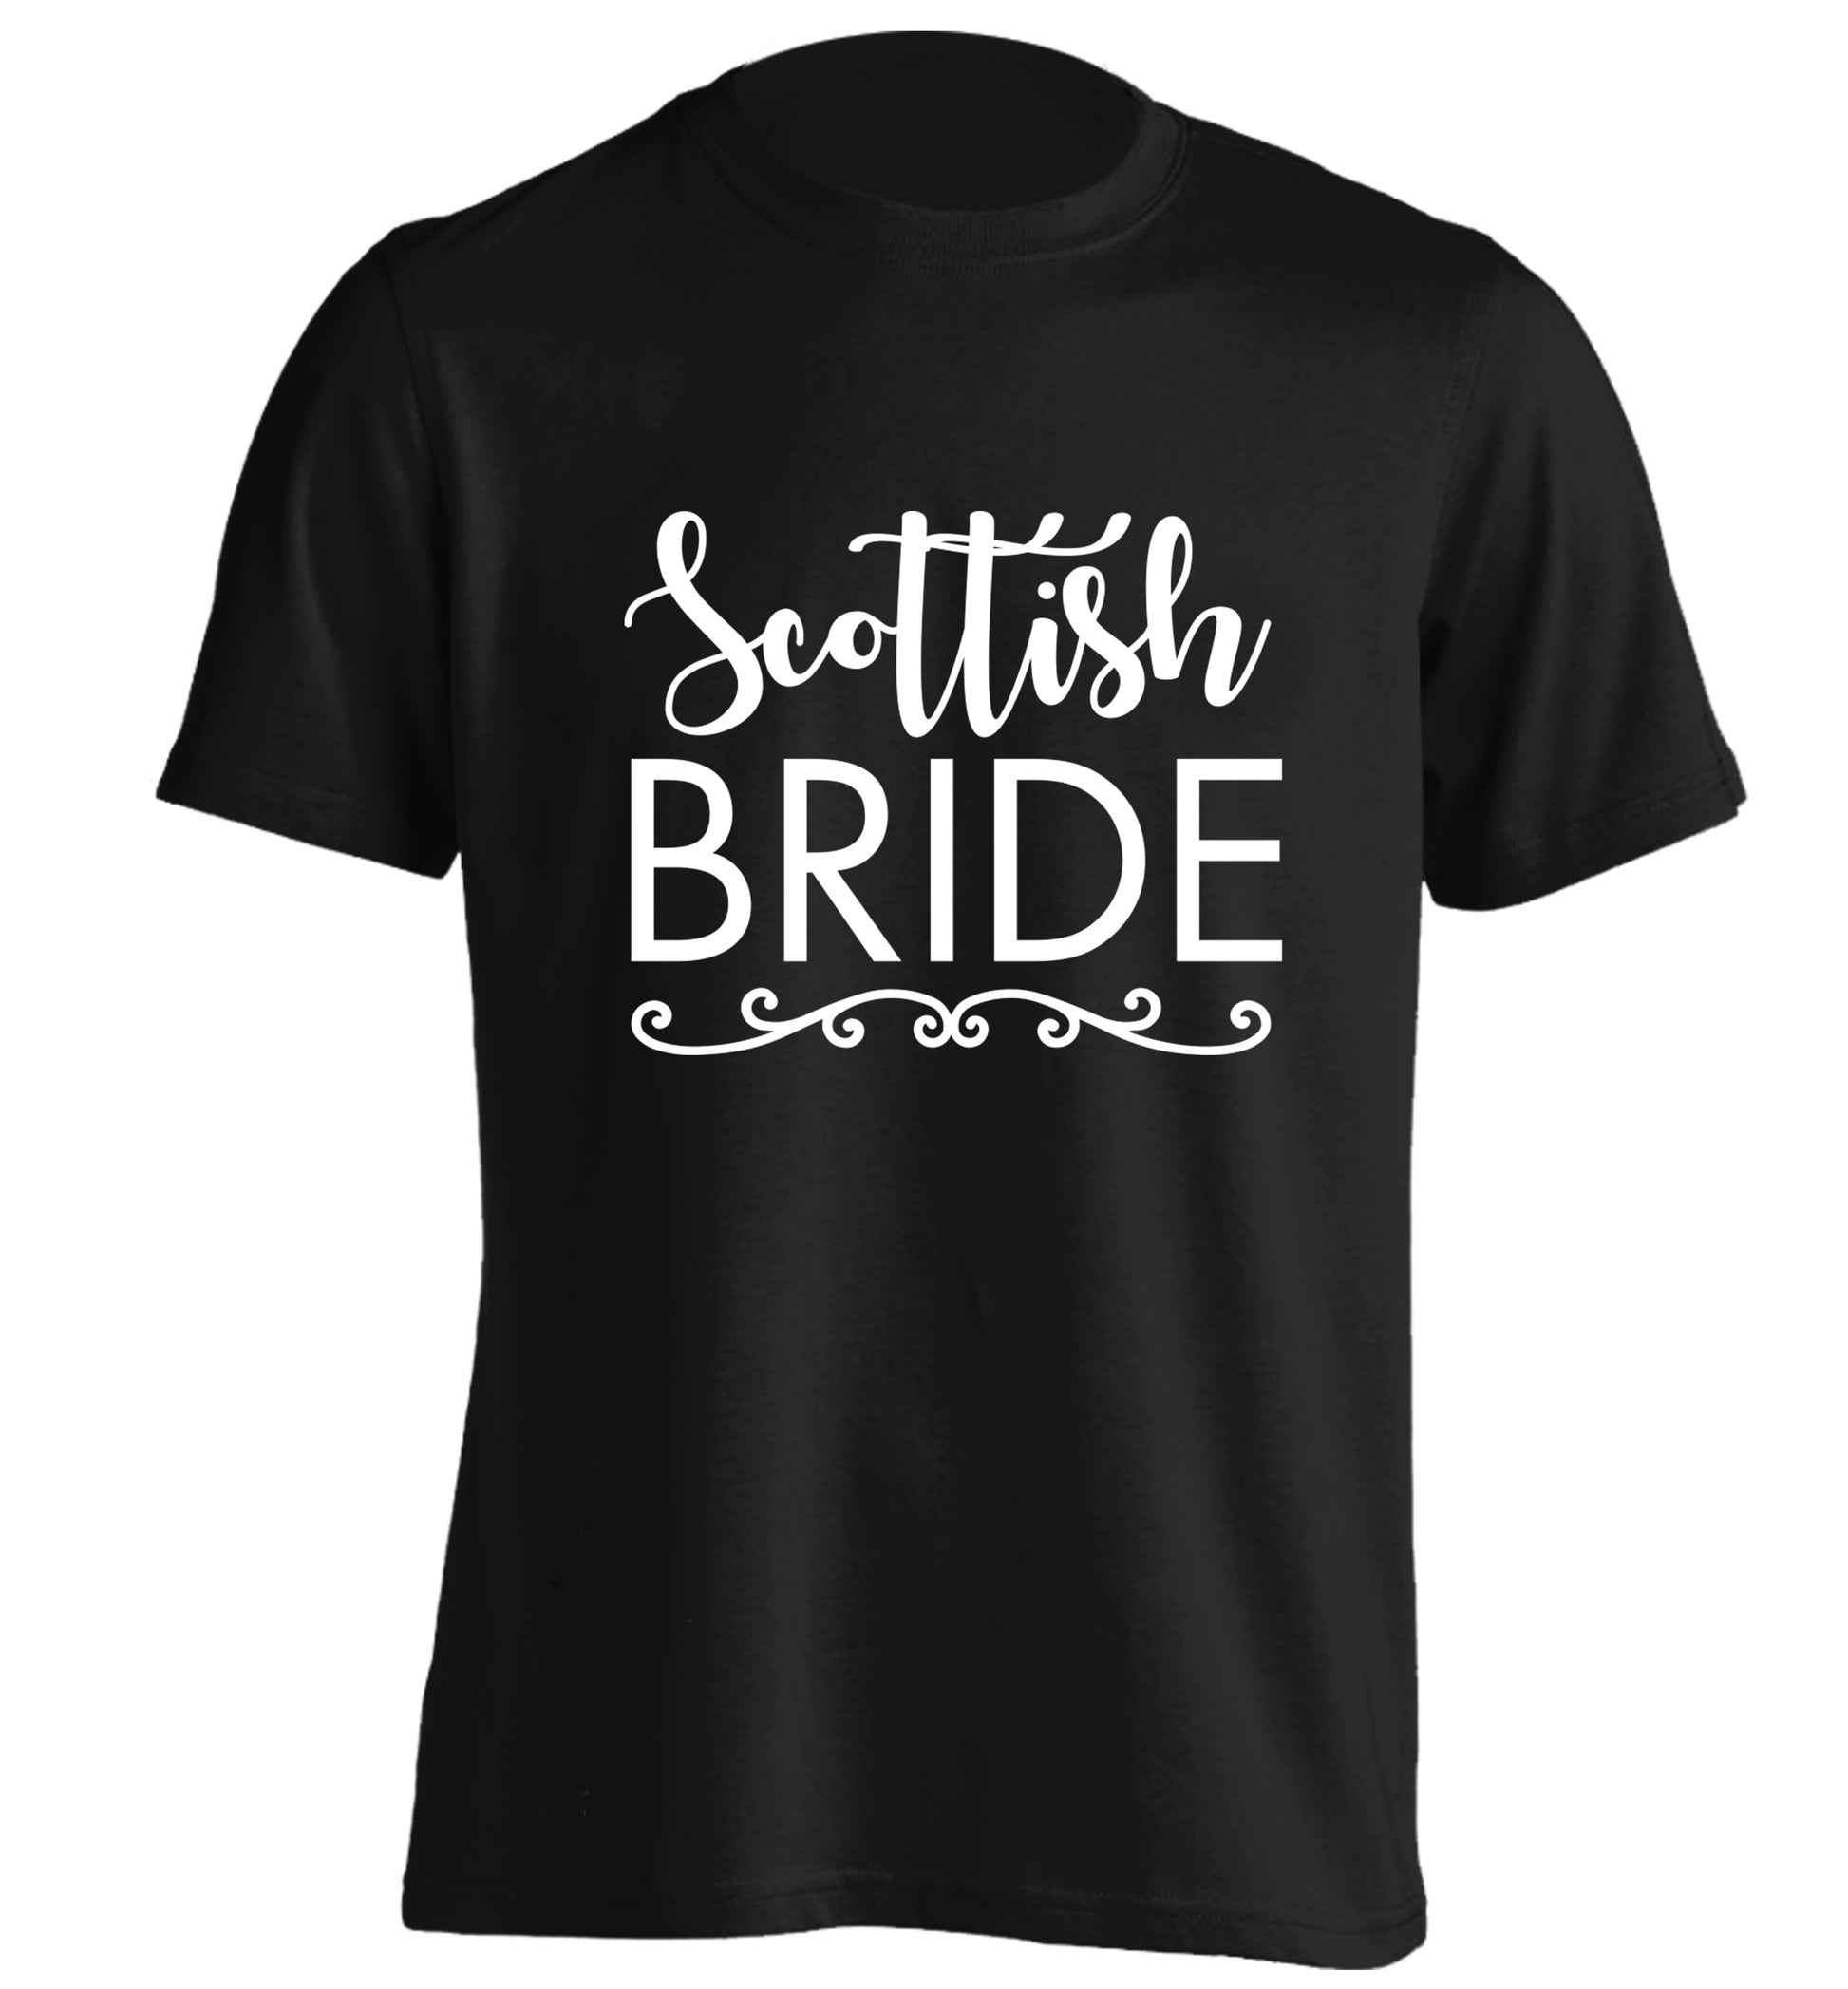 Scottish Bride adults unisex black Tshirt 2XL